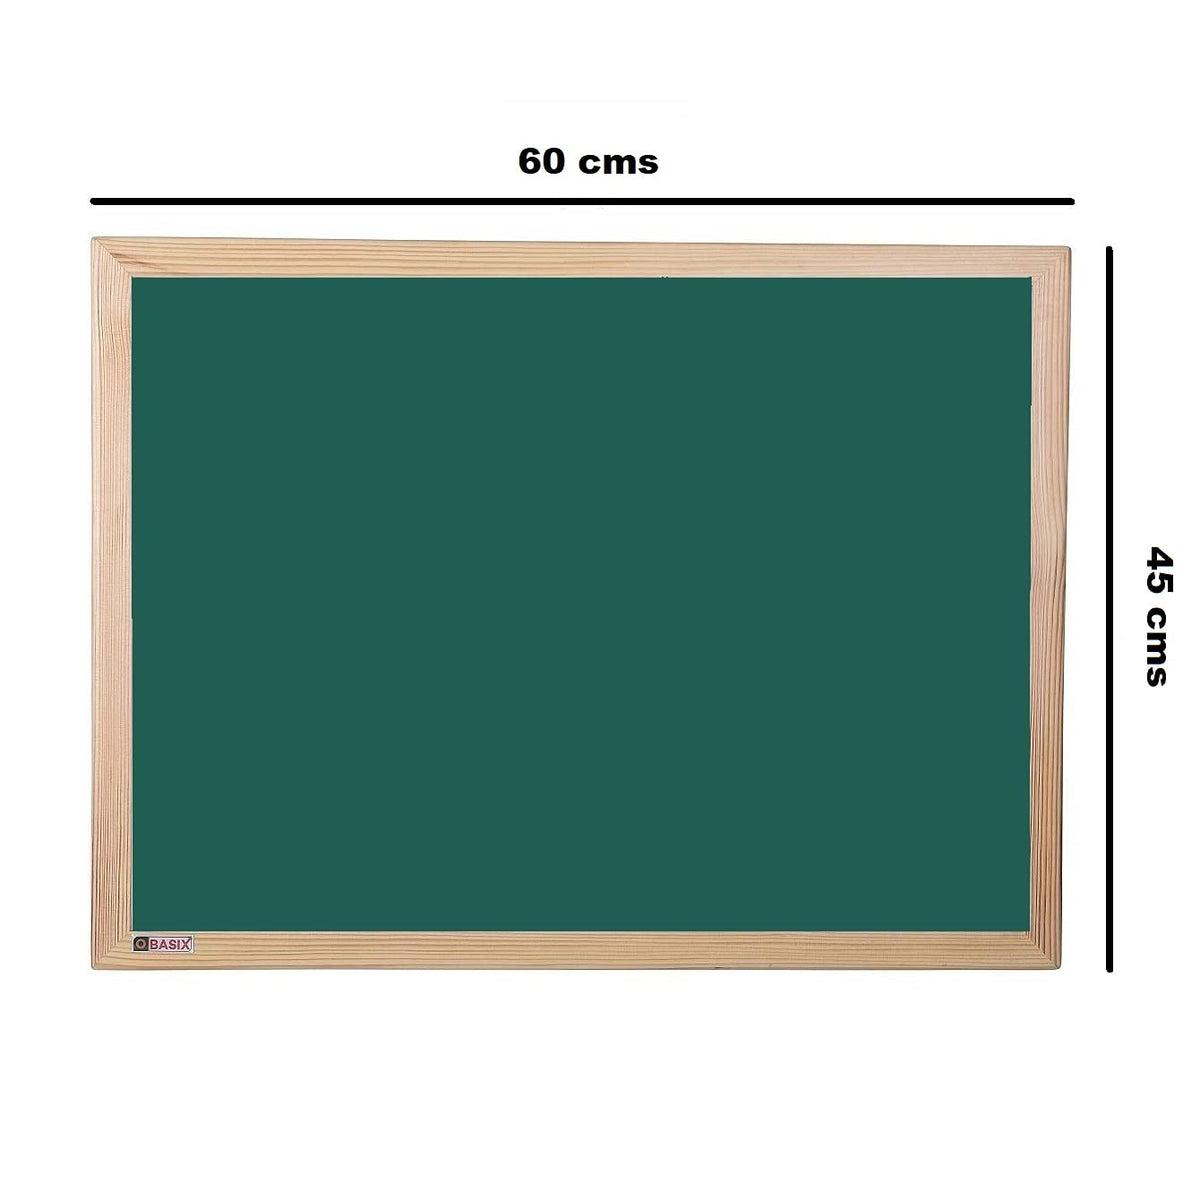 OBASIX® Green Chalk Board 1.5x2 feet (Non-Magnetic) | Natural Pine Wood PWCB4560